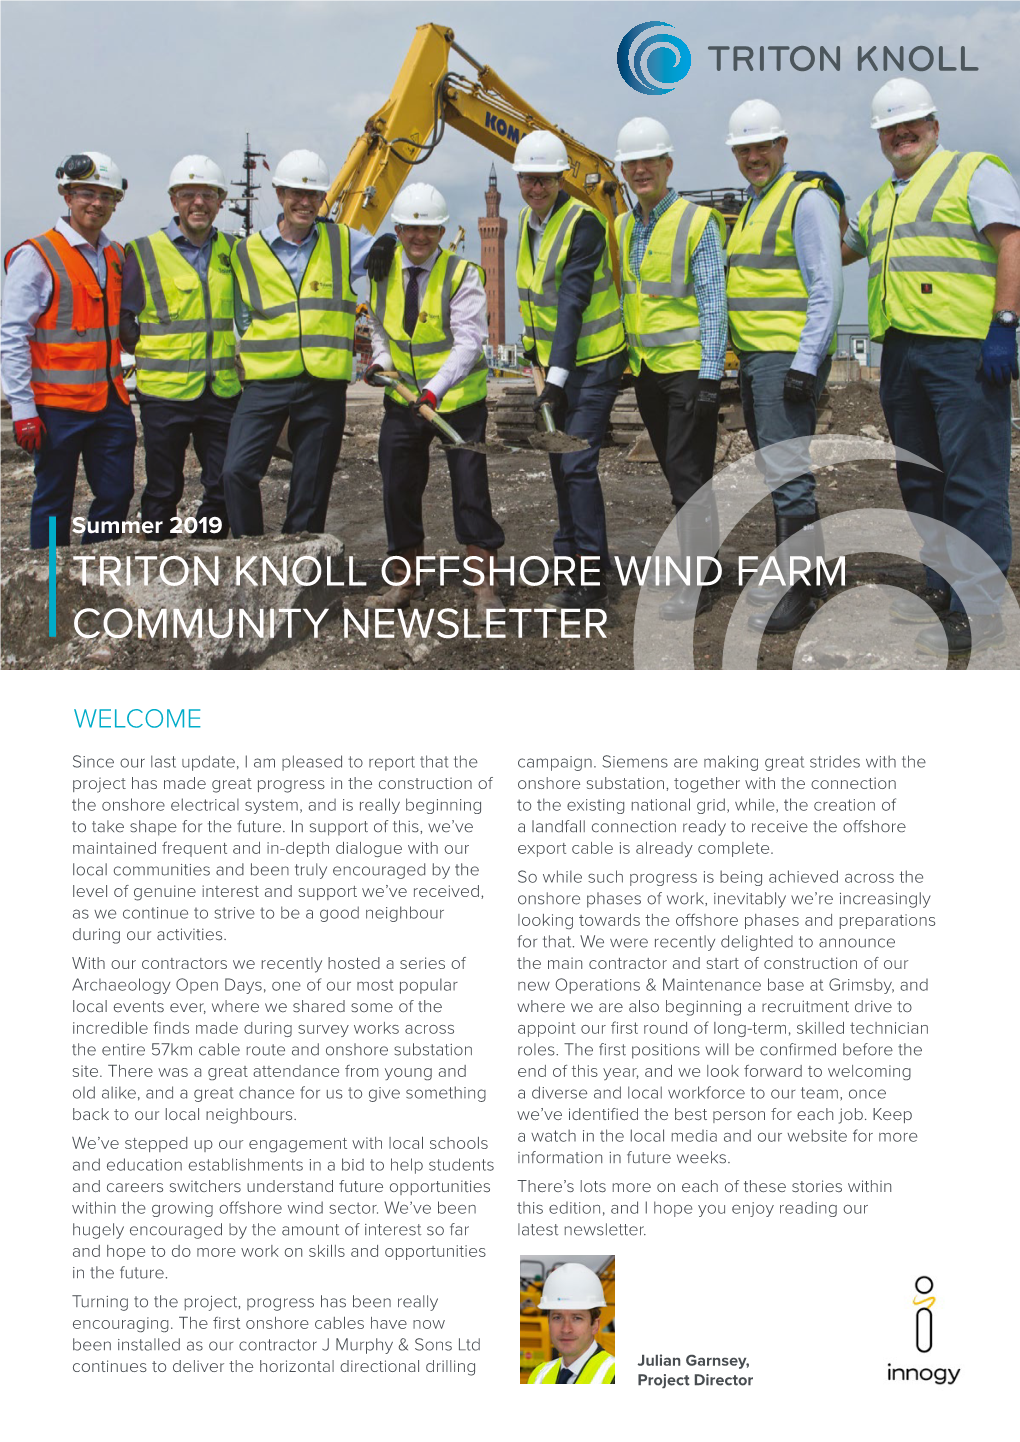 Triton Knoll Offshore Wind Farm Community Newsletter